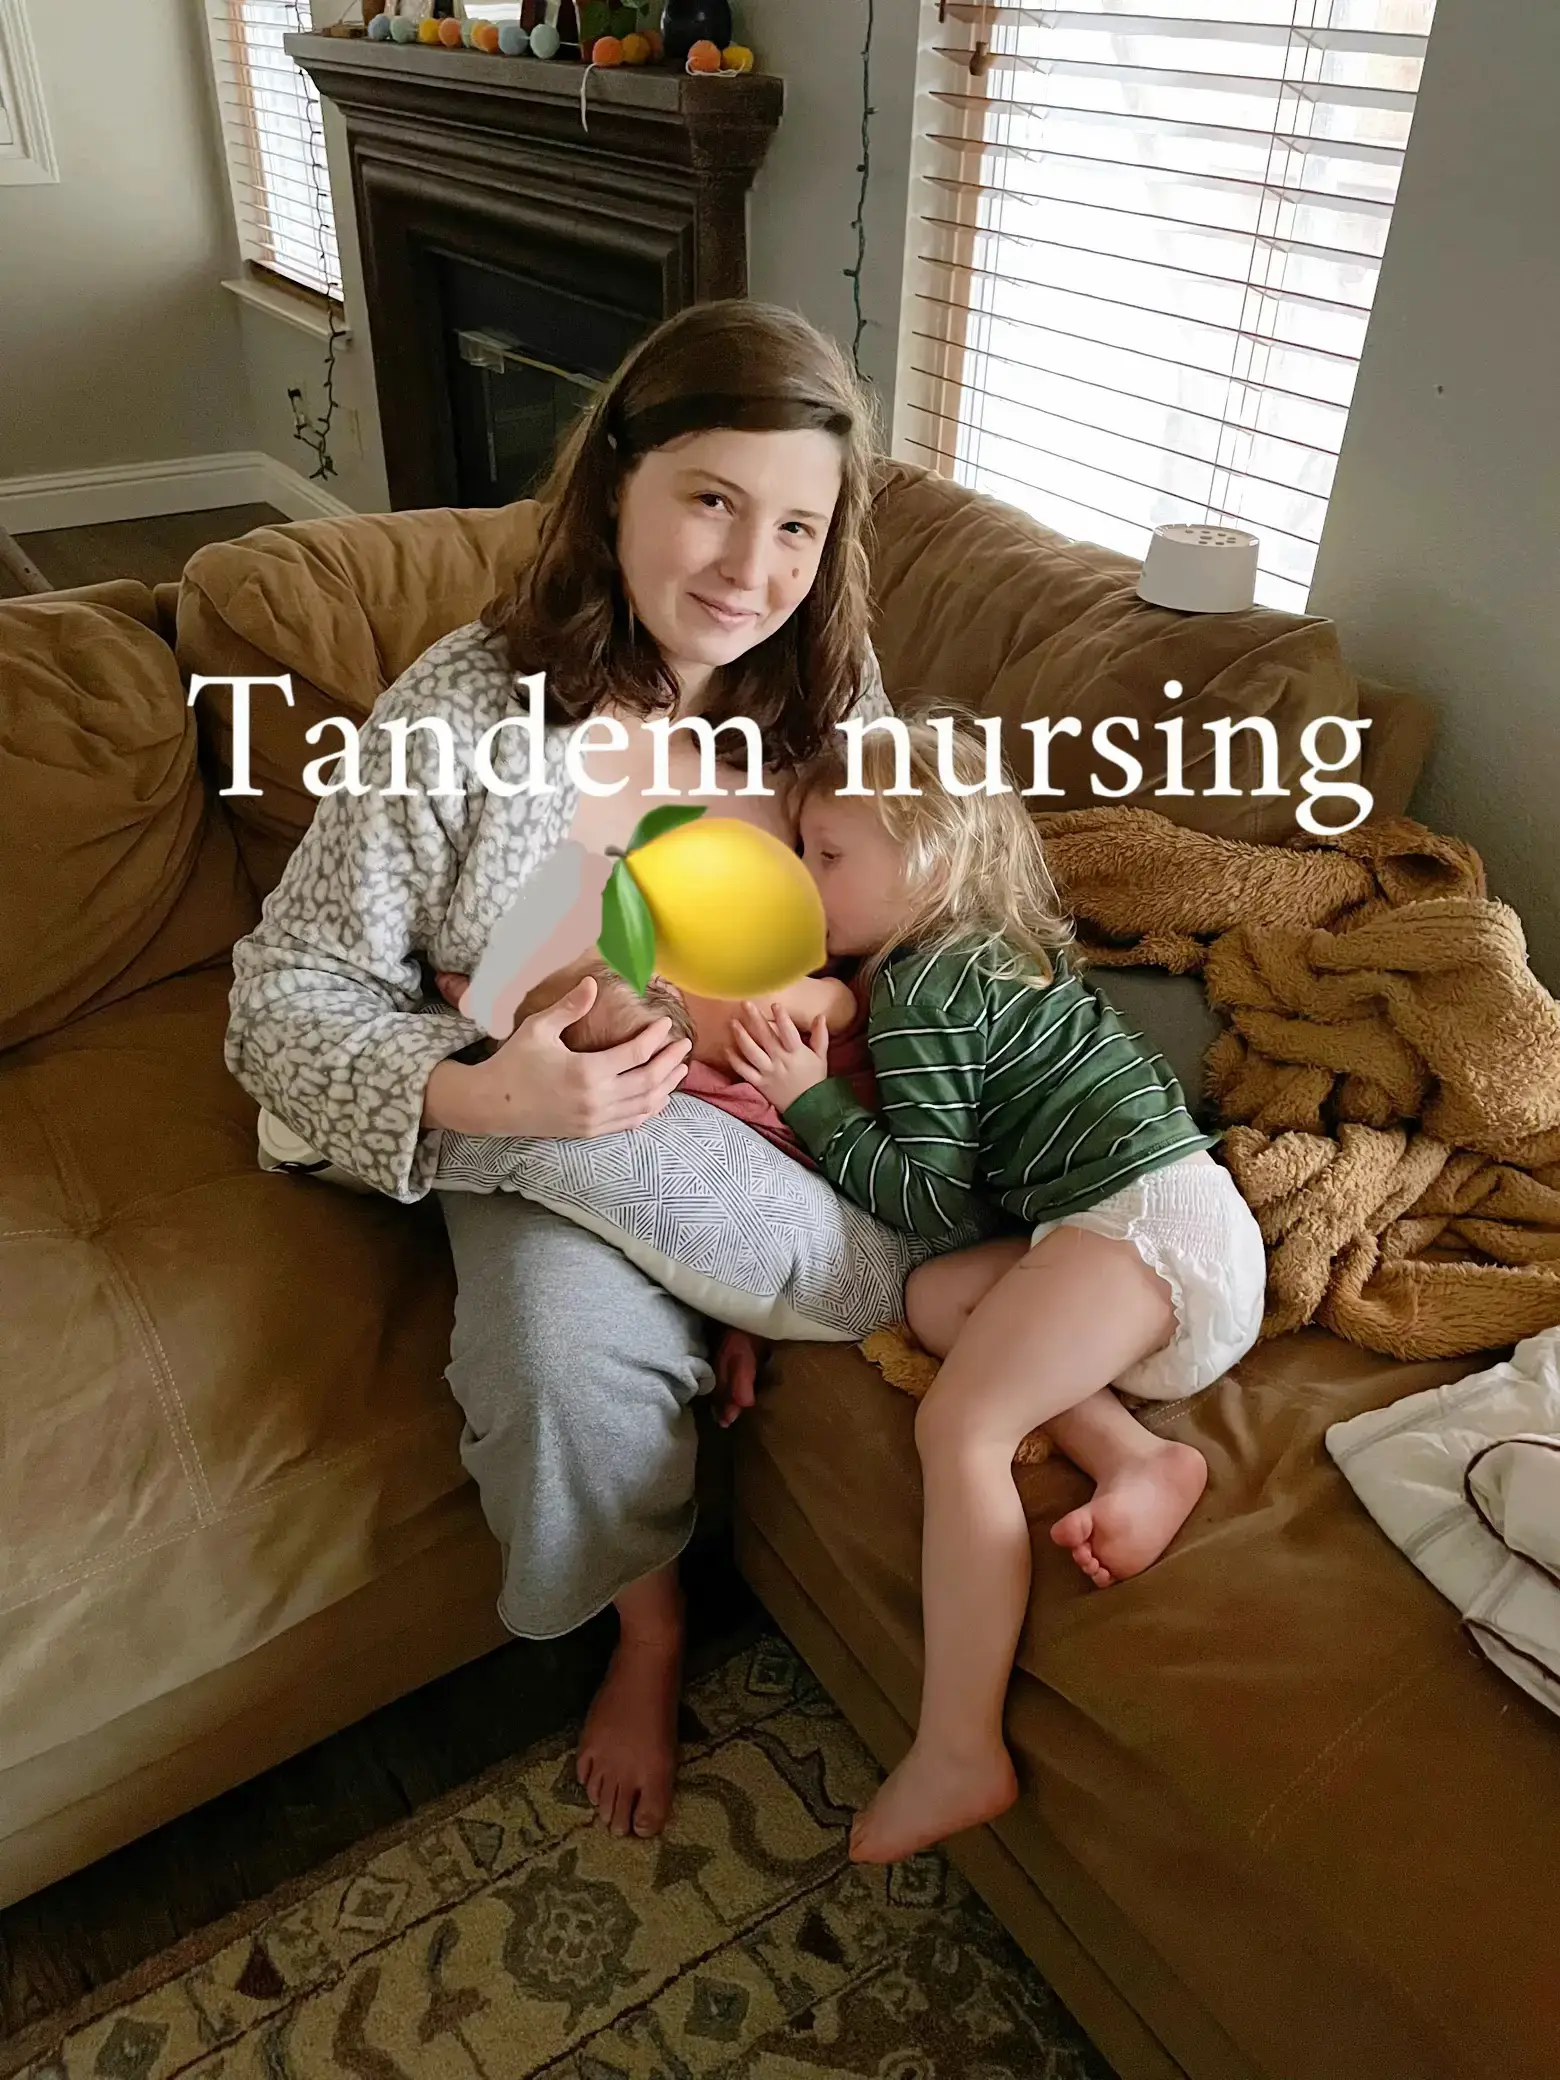 Nursing Babies - Lemon8 Search